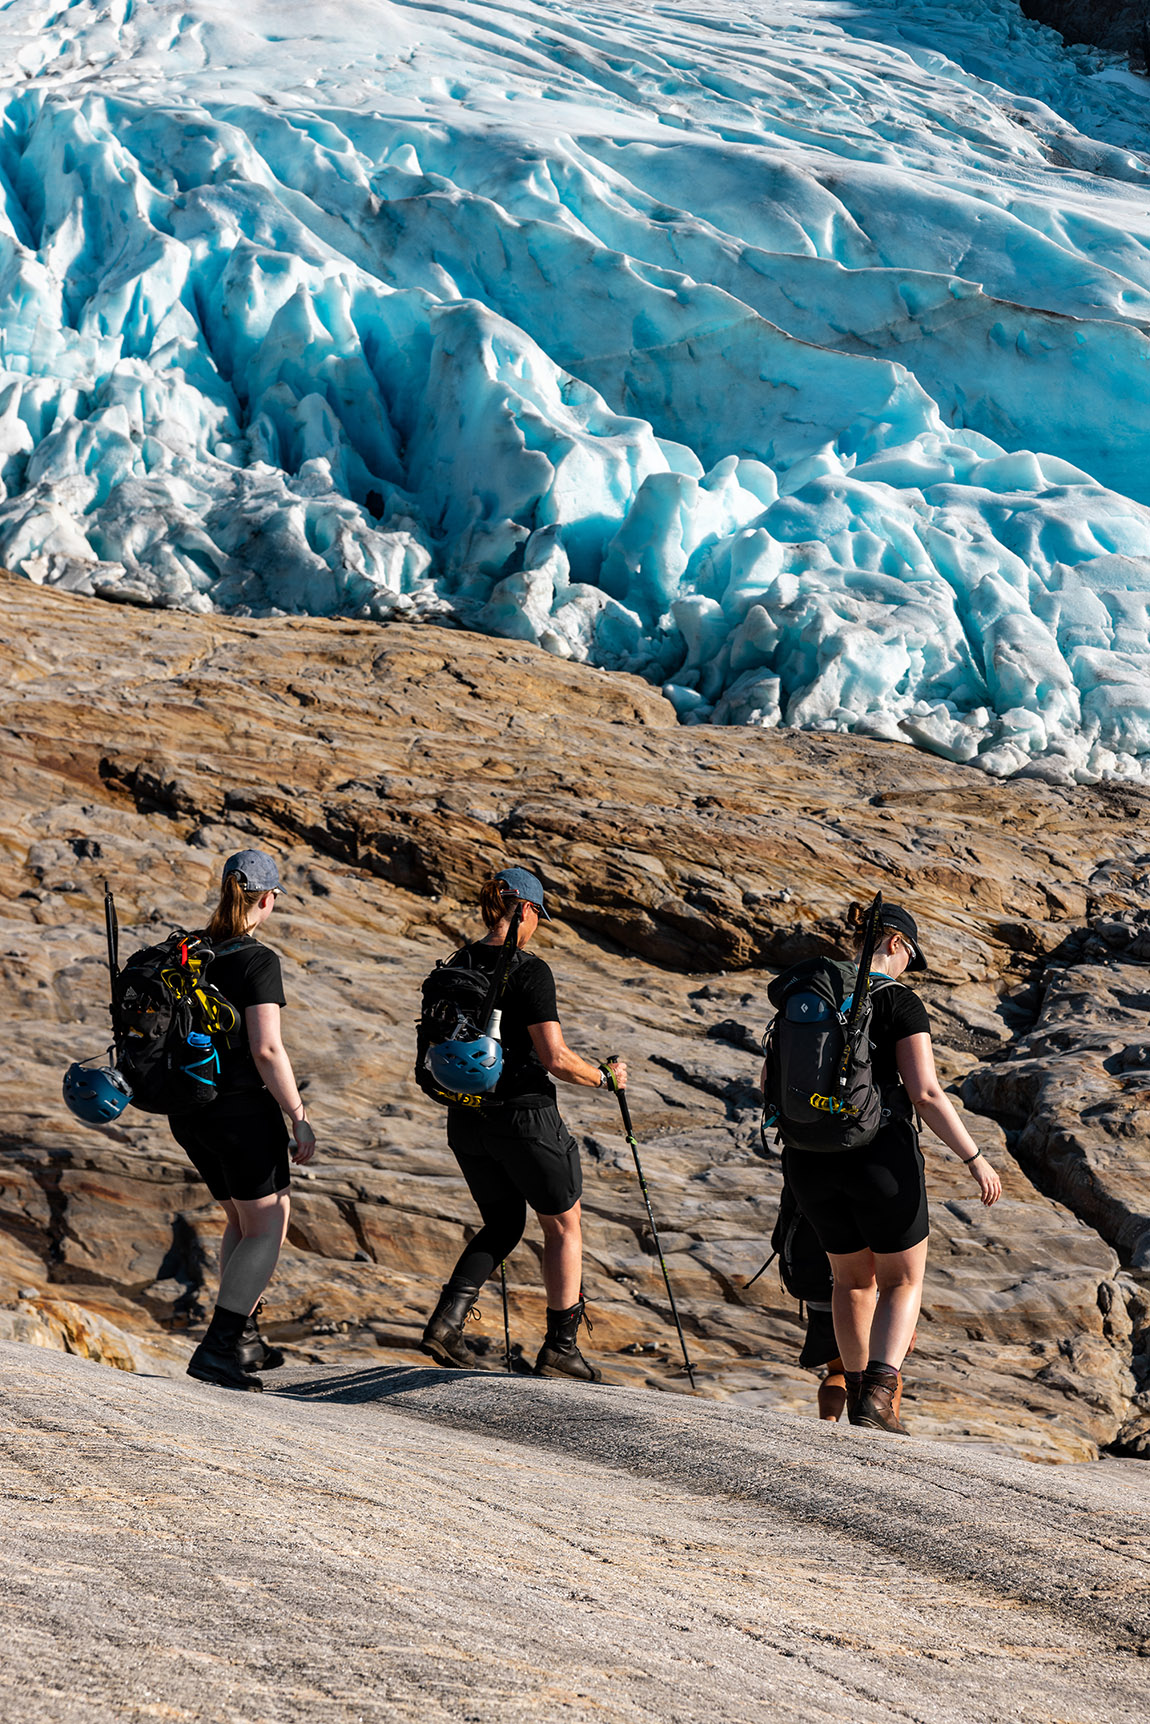 Svartisen – a prehistoric glacier ready for exploration